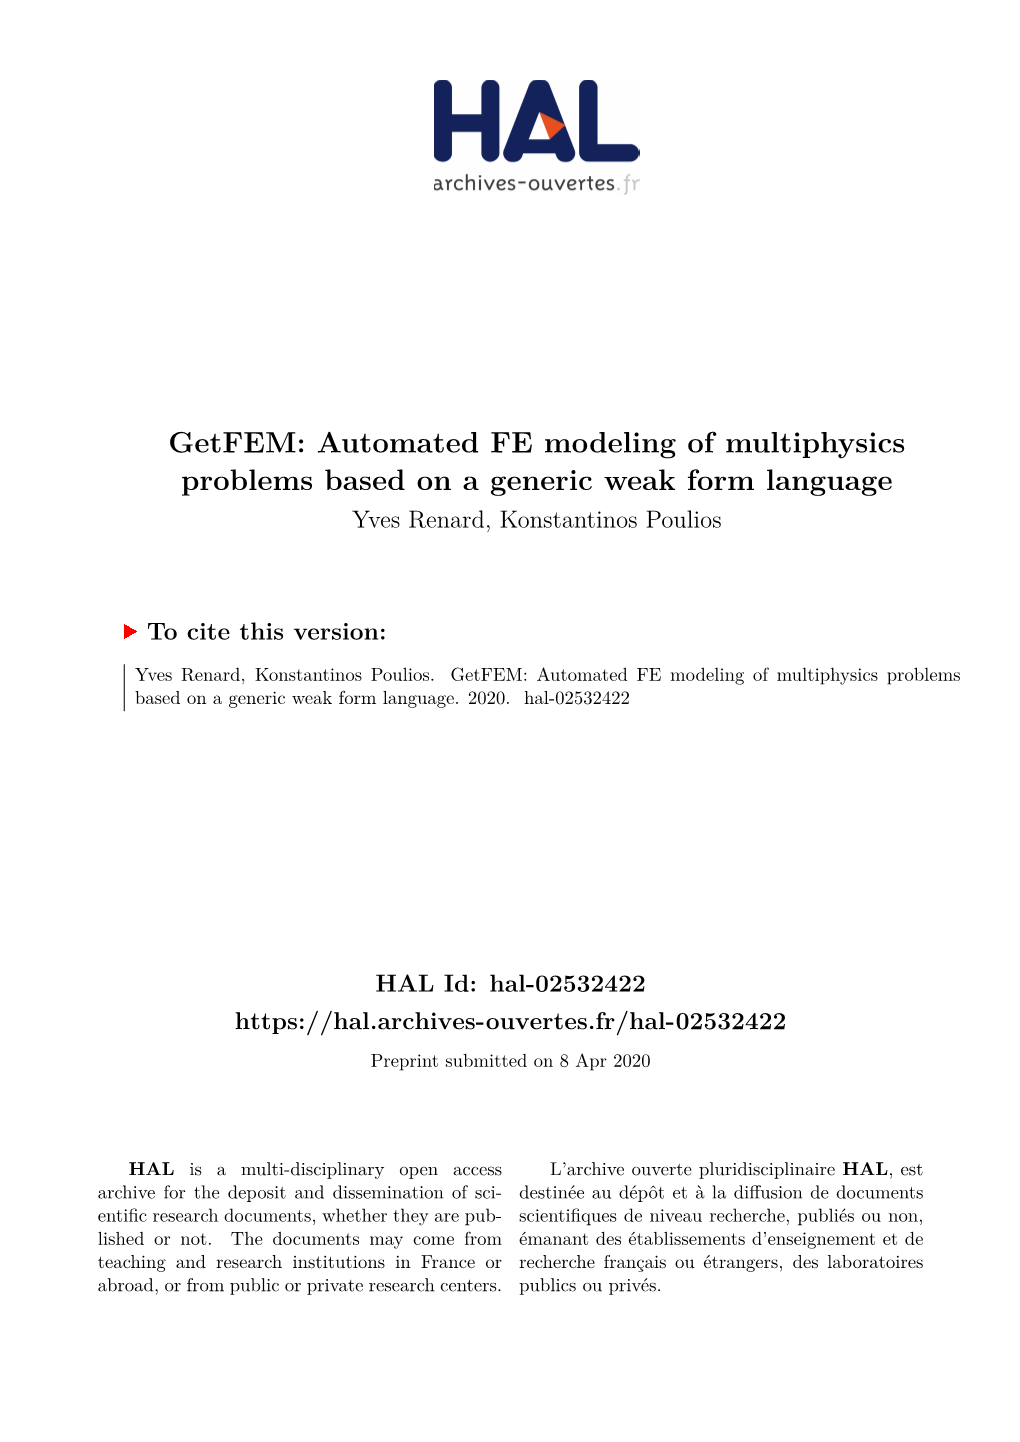 Getfem: Automated FE Modeling of Multiphysics Problems Based on a Generic Weak Form Language Yves Renard, Konstantinos Poulios